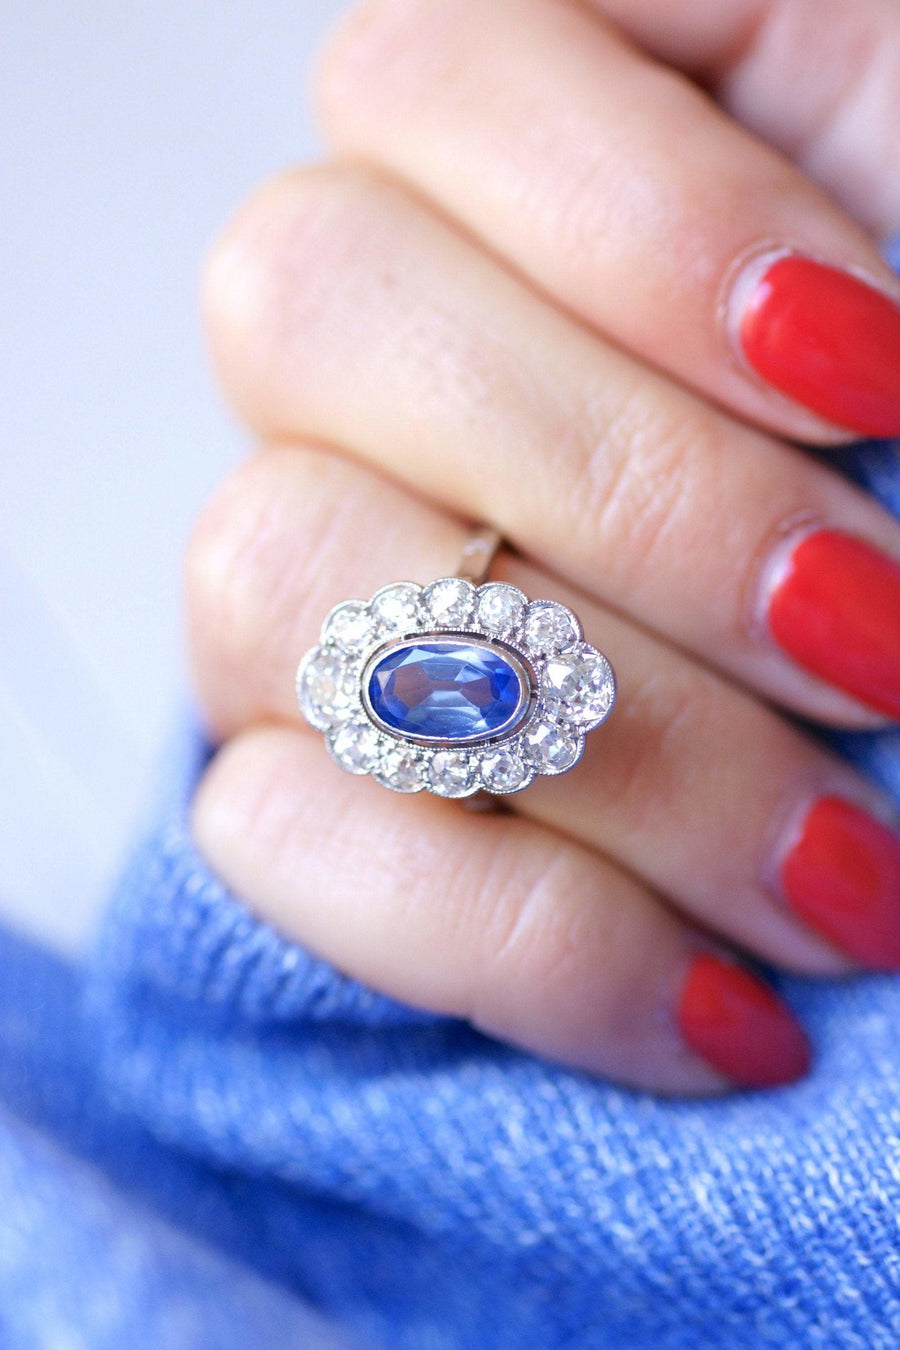 Belle Epoque sapphire engagement ring with diamonds on platinum - Galerie Pénélope